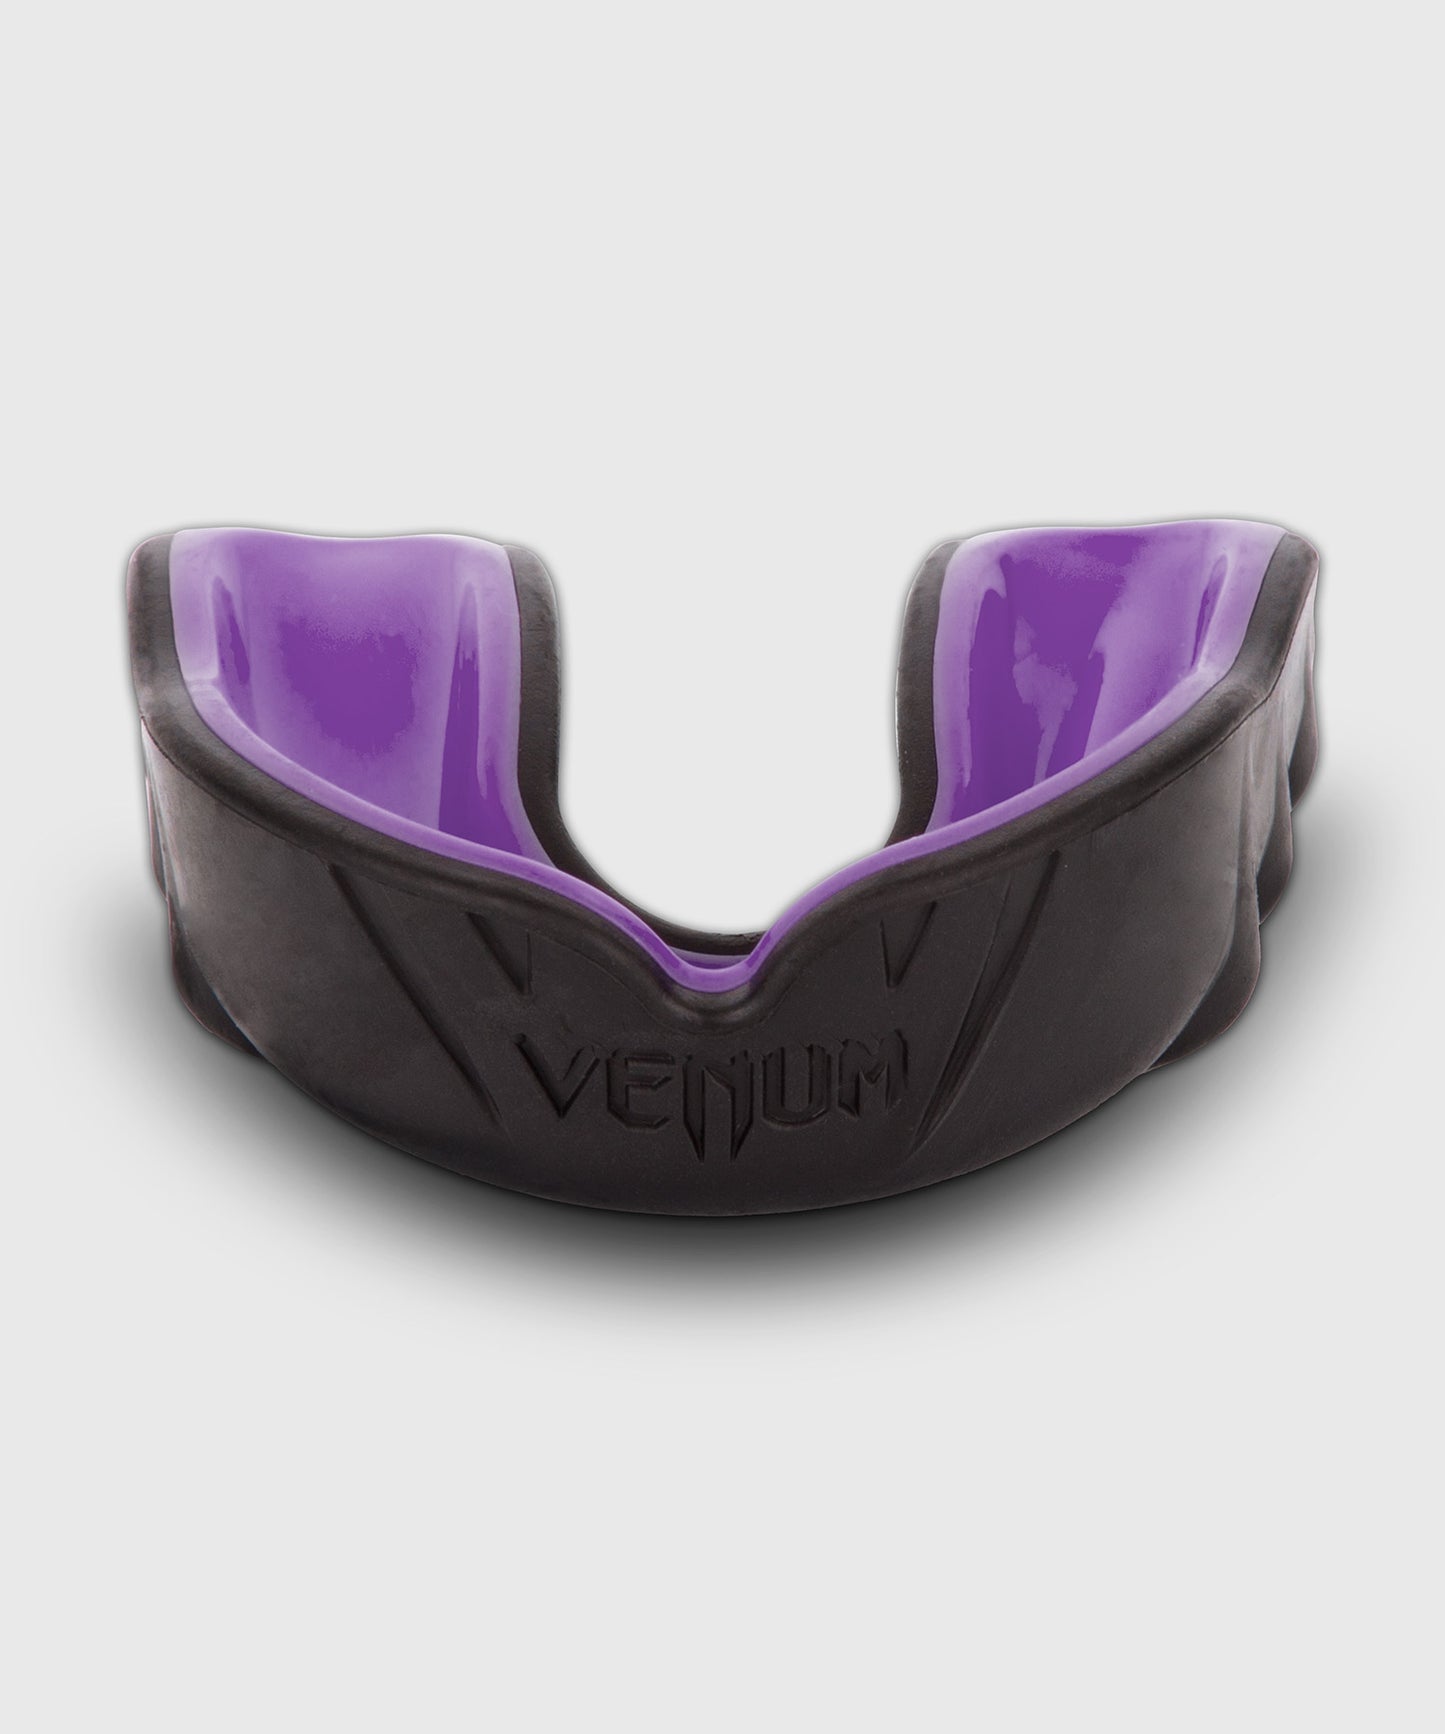 Protège-dents Venum Challenger - Noir/Violet - Protège-dents